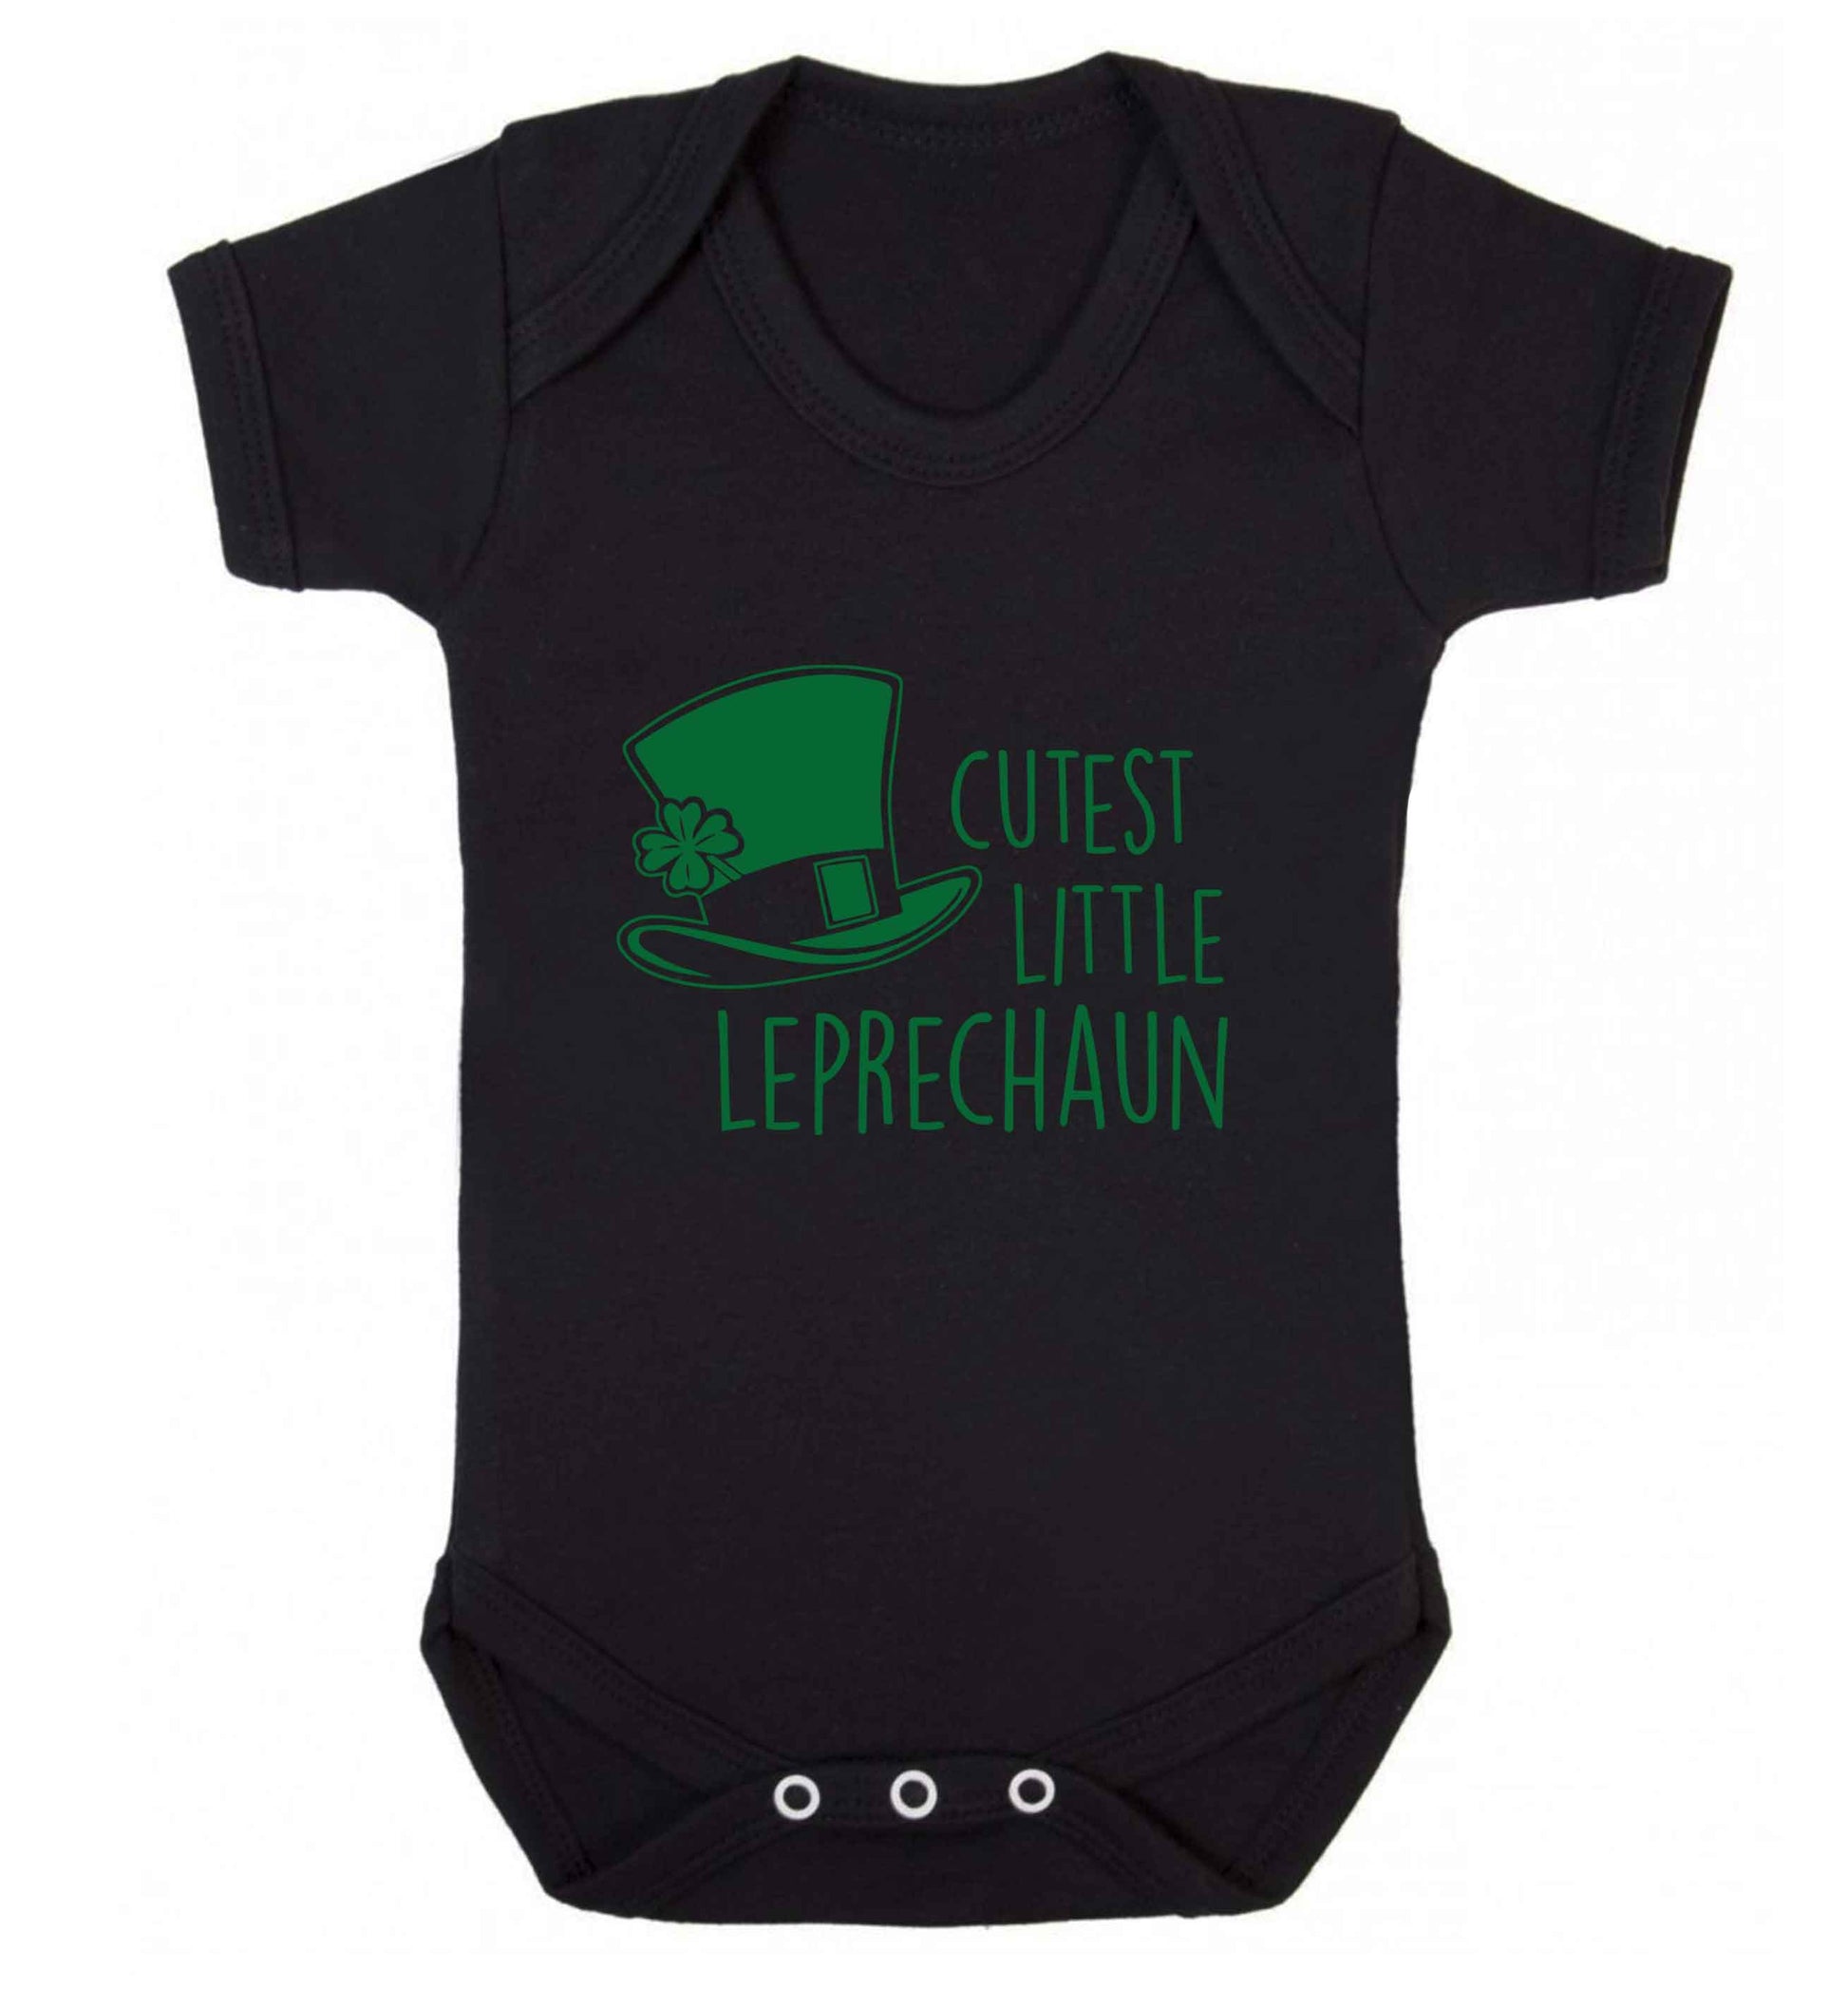 Cutest little leprechaun baby vest black 18-24 months